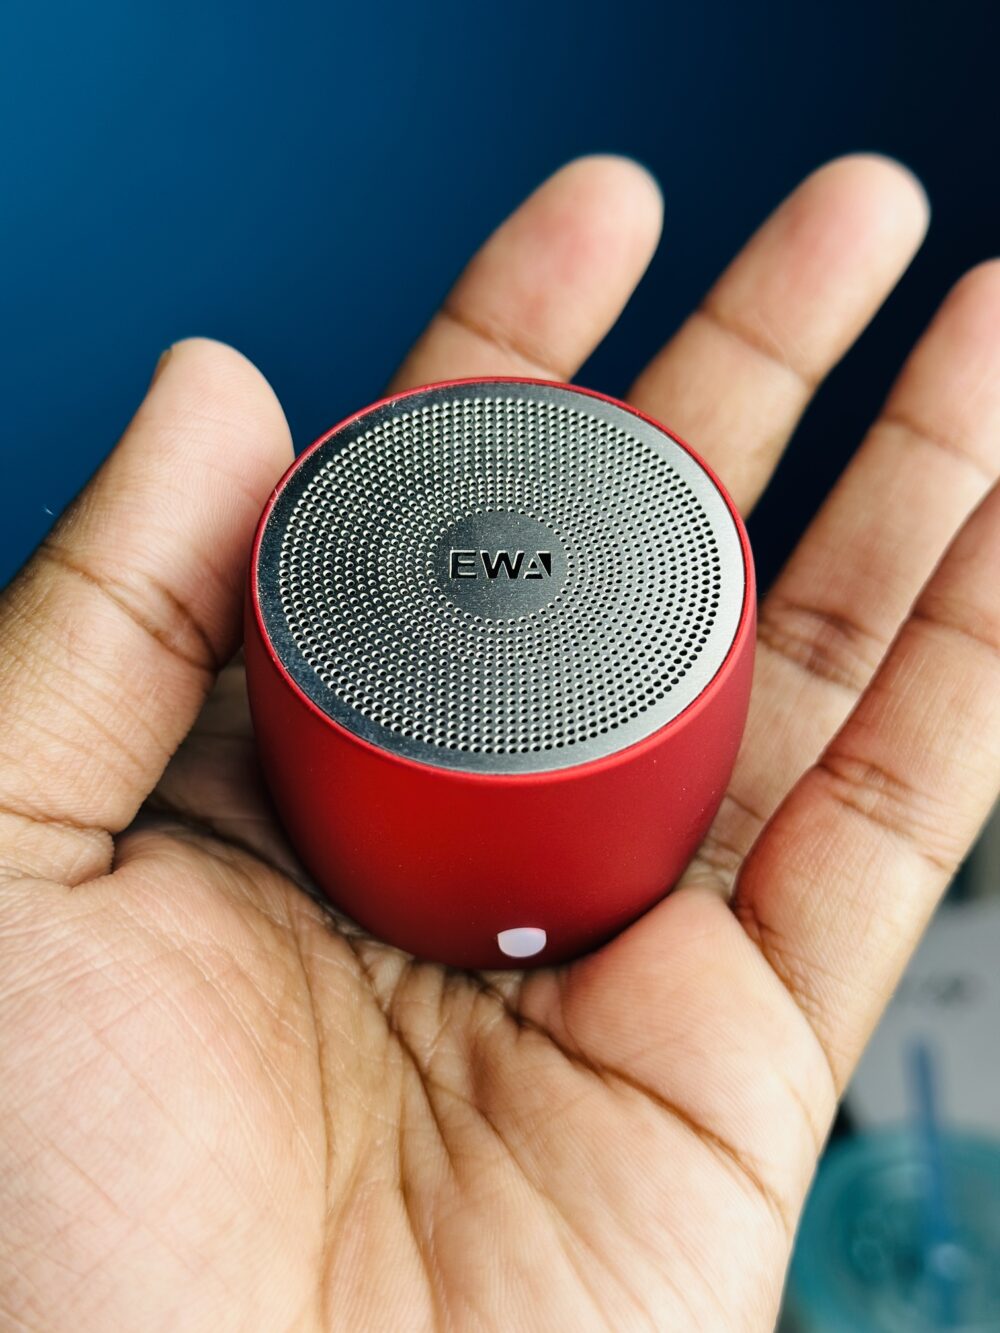 ewa a103 speaker, mini blueooth speaker, mini speaker, bluetooth speaker, mini speaker price in bangladesh, ewa a103 speaker price in bangladesh, ewa a103 grey color, minhajzone,